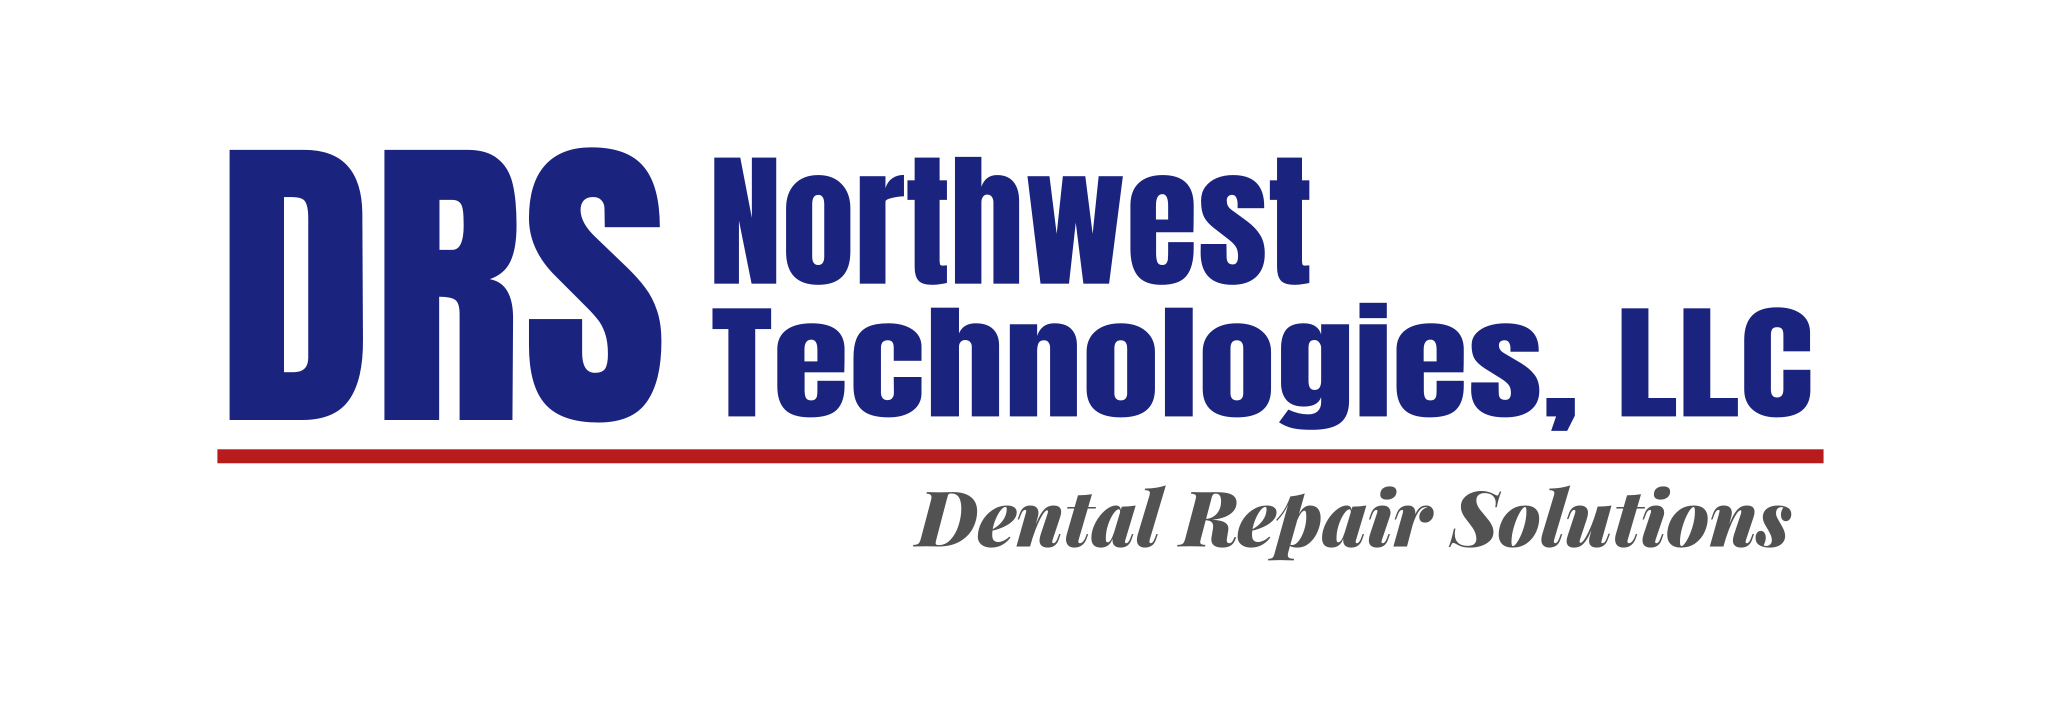 DRS Northwest Technologies, LLC